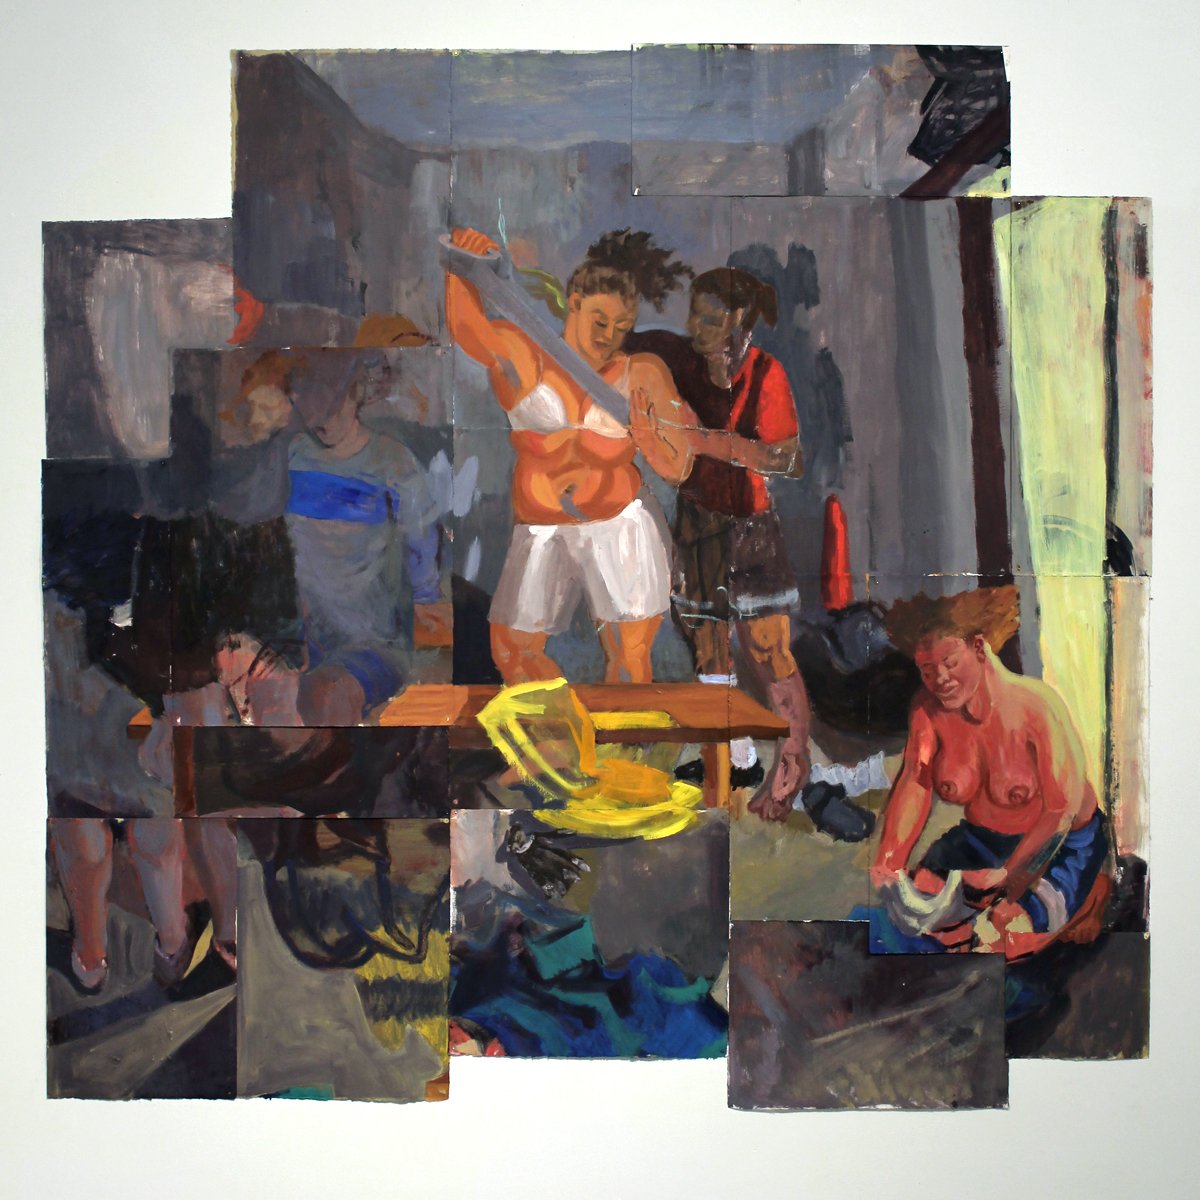   Locker Room  84 in x 88 in oil on paper 2014 